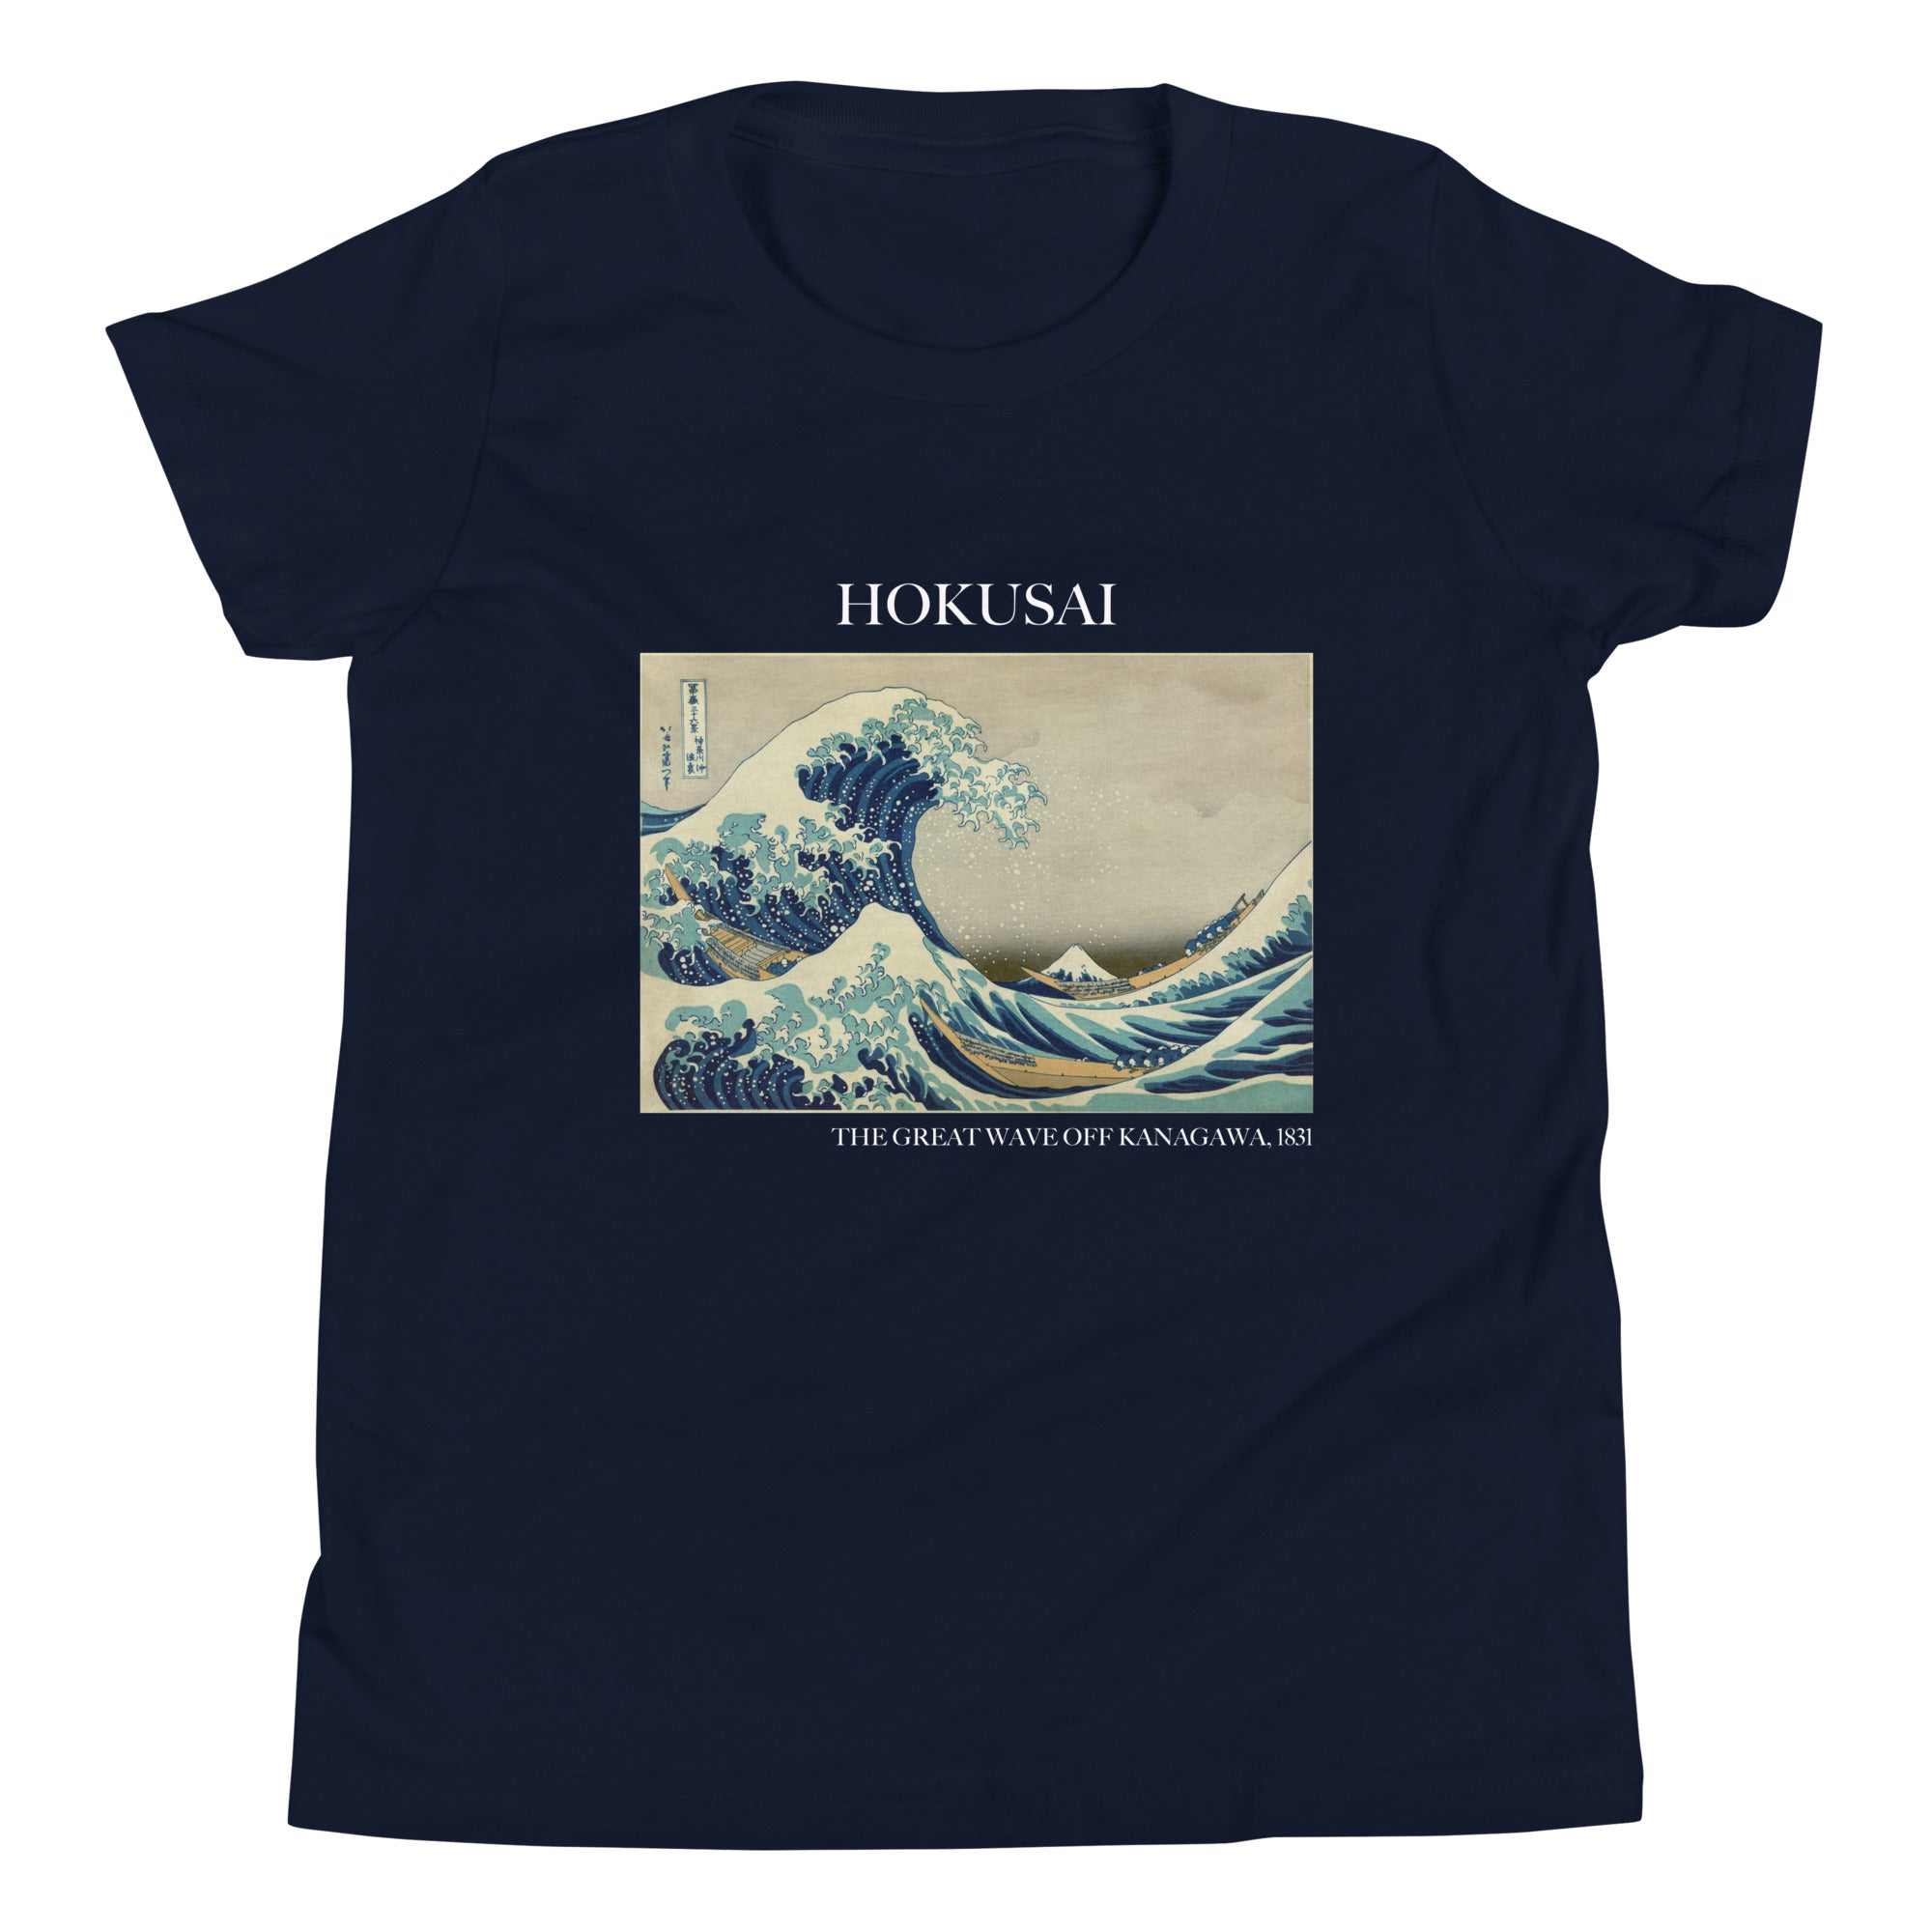 Hokusai 'The Great Wave off Kanagawa' Famous Painting Short Sleeve T-Shirt | Premium Youth Art Tee